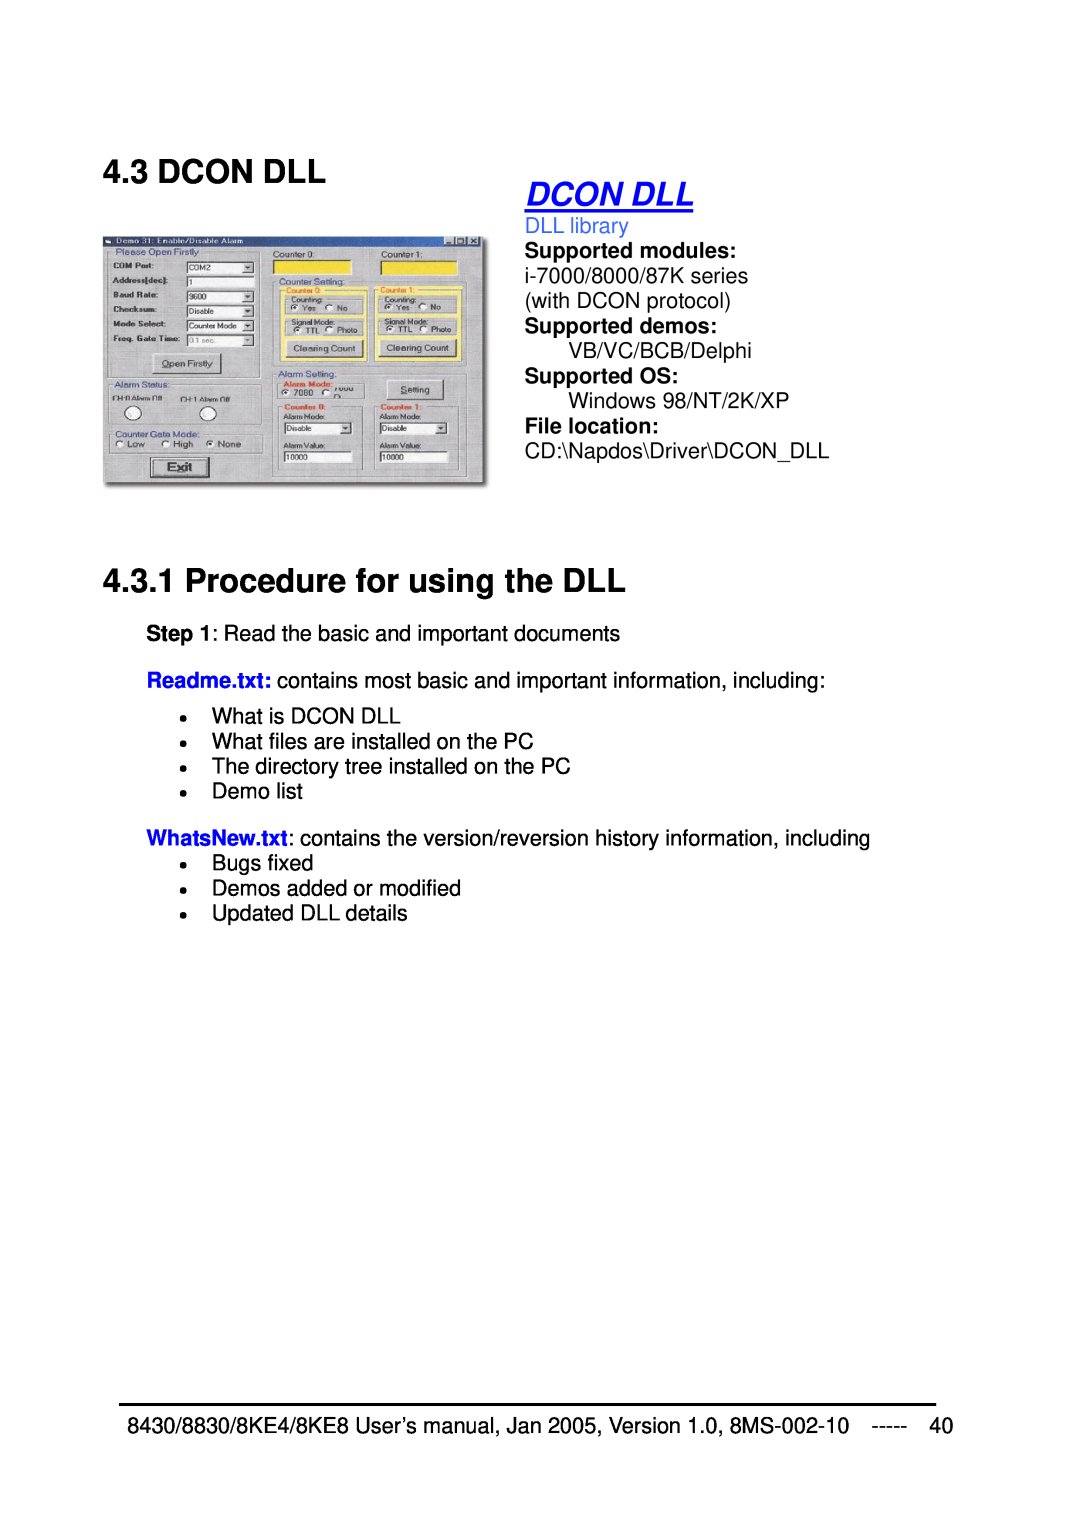 ICP DAS USA 8KE8, 8KE4, 8430, 8830 user manual Dcon Dll, Procedure for using the DLL, DLL library 